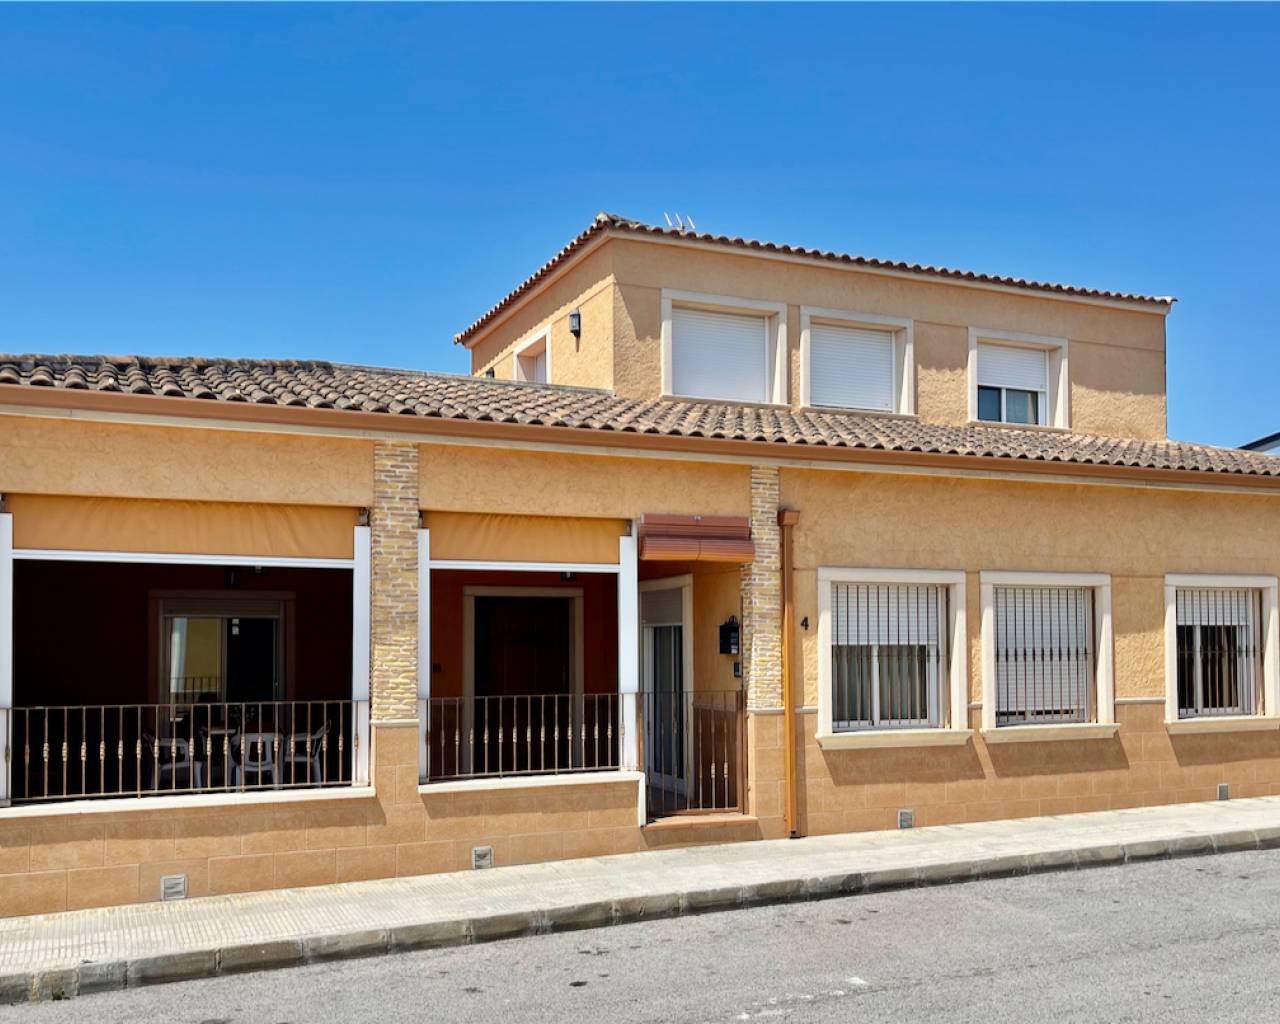 5 bedroom house / villa for sale in Catral, Costa Blanca